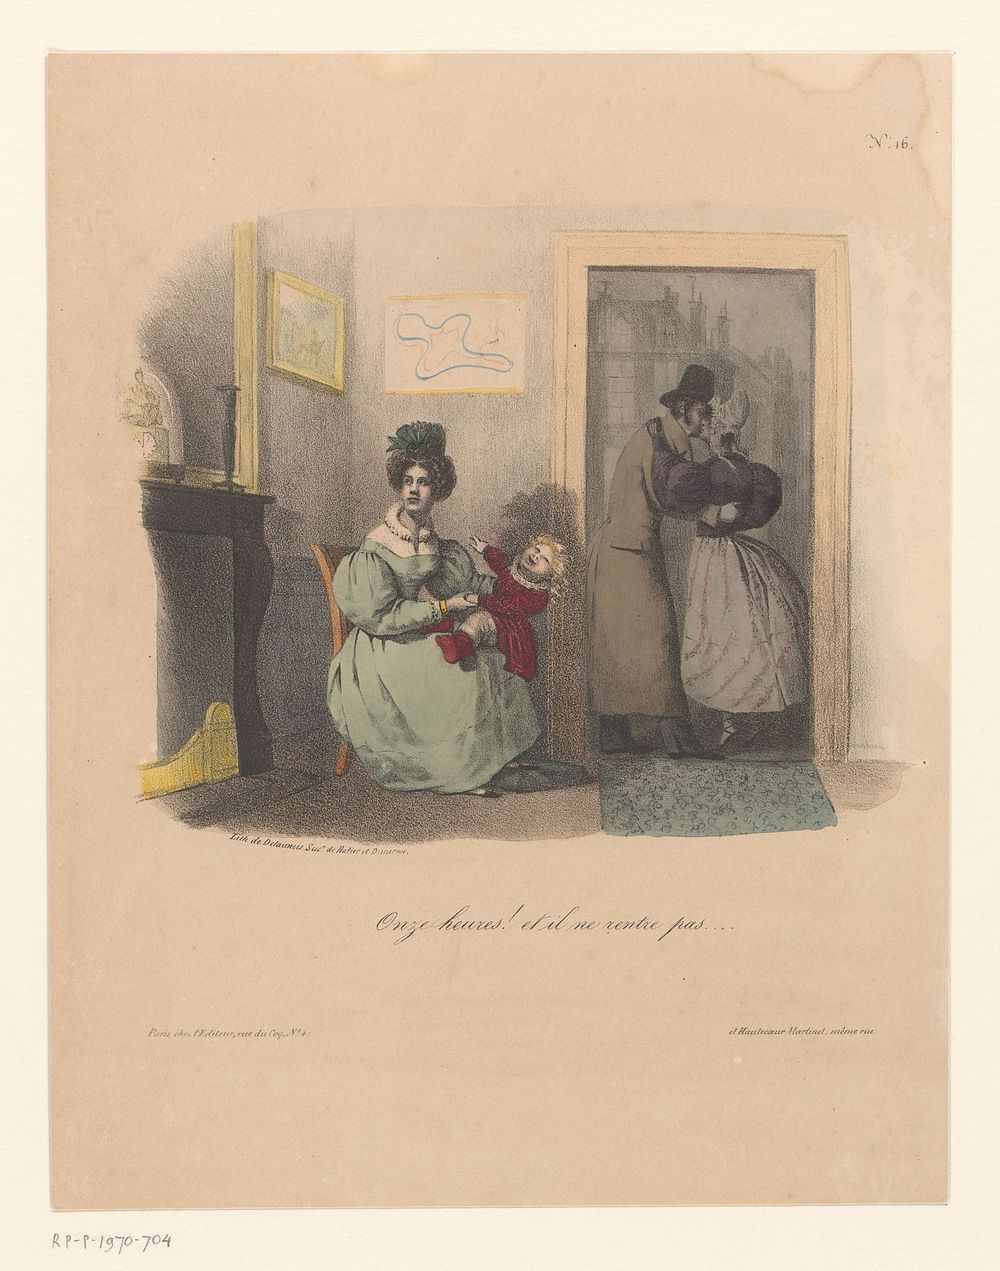 De bedrogen echtgenote (1830 - 1831) by anonymous, Nicolas Louis Delaunois and Hautecoeur Martinet